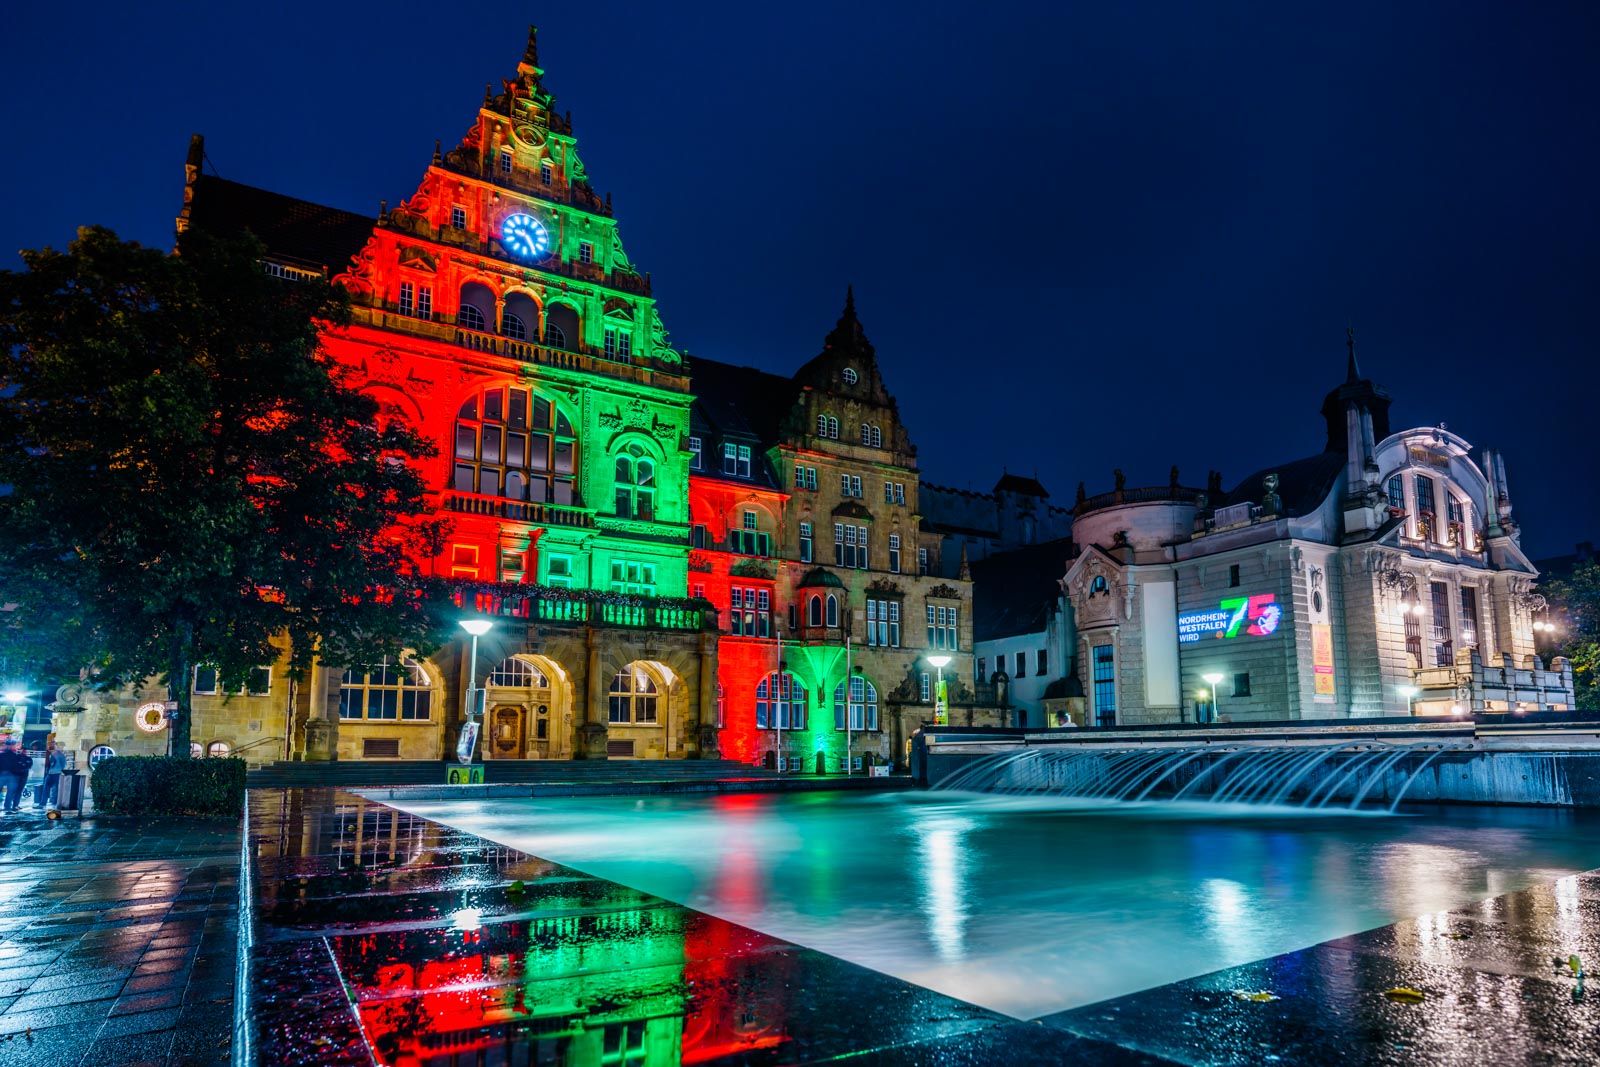 75 years of NRW - Bielefeld City Hall on August 28, 2021 (Bielefeld, Germany).